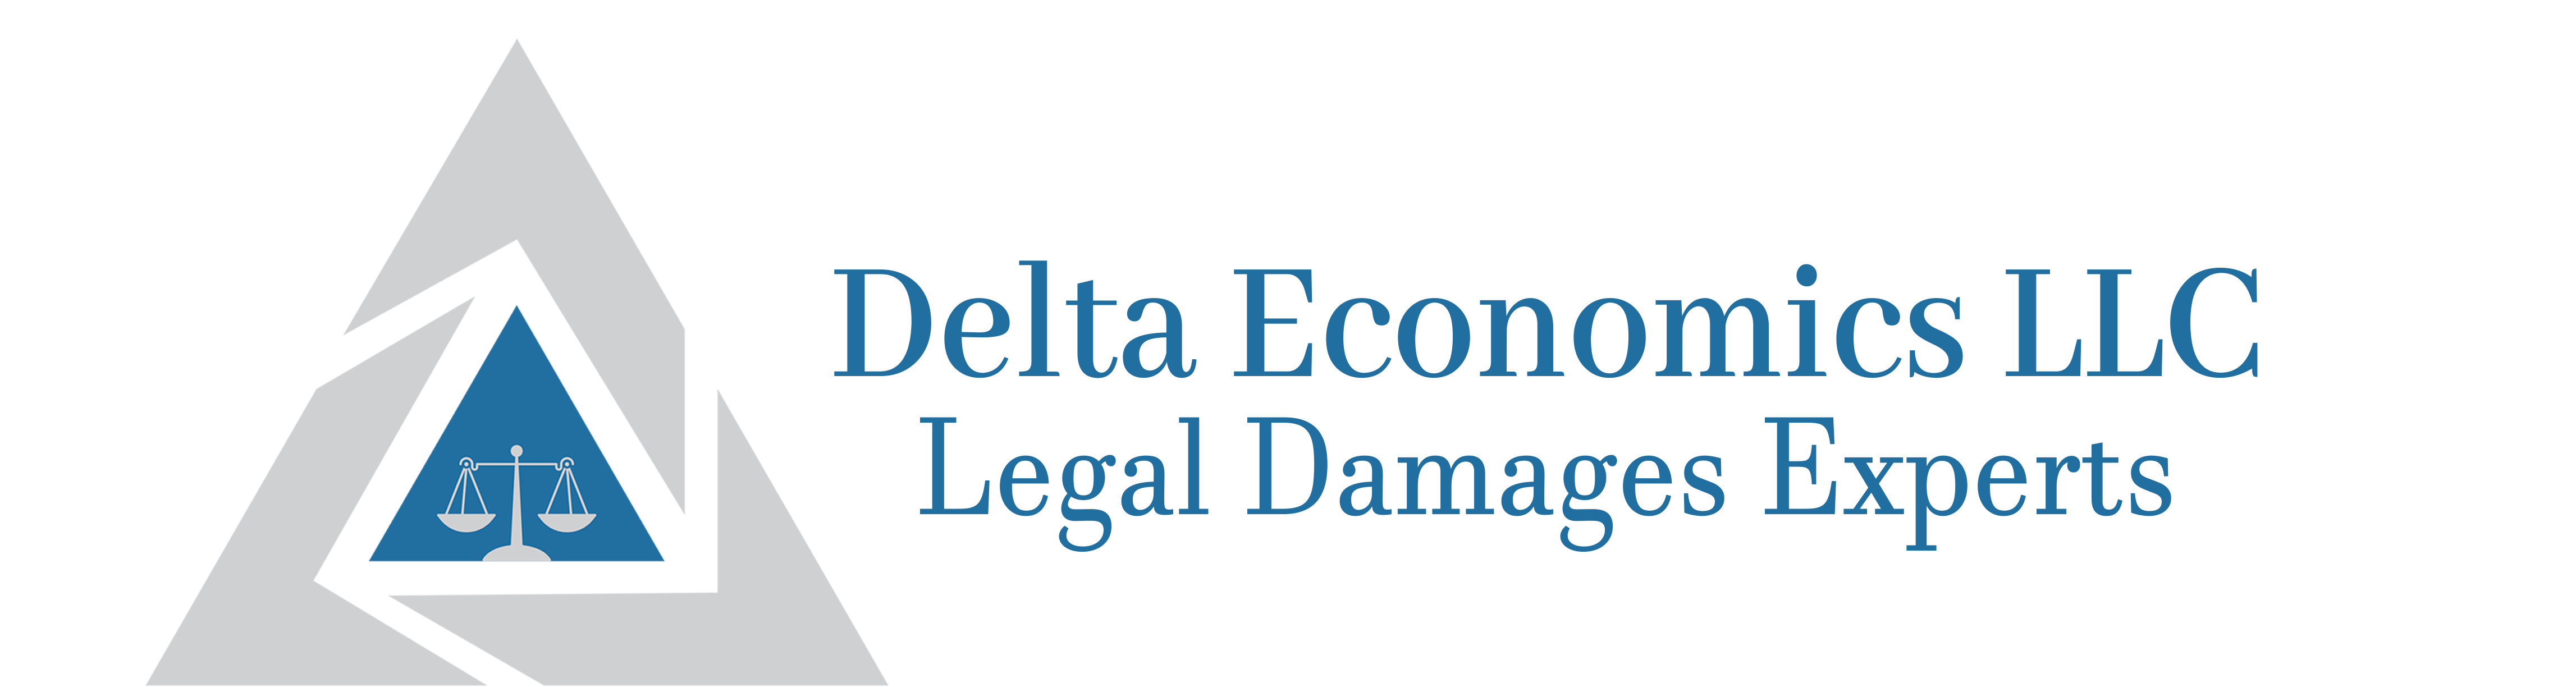 Delta Economics LLC - Legal Damages Experts For Lawyers